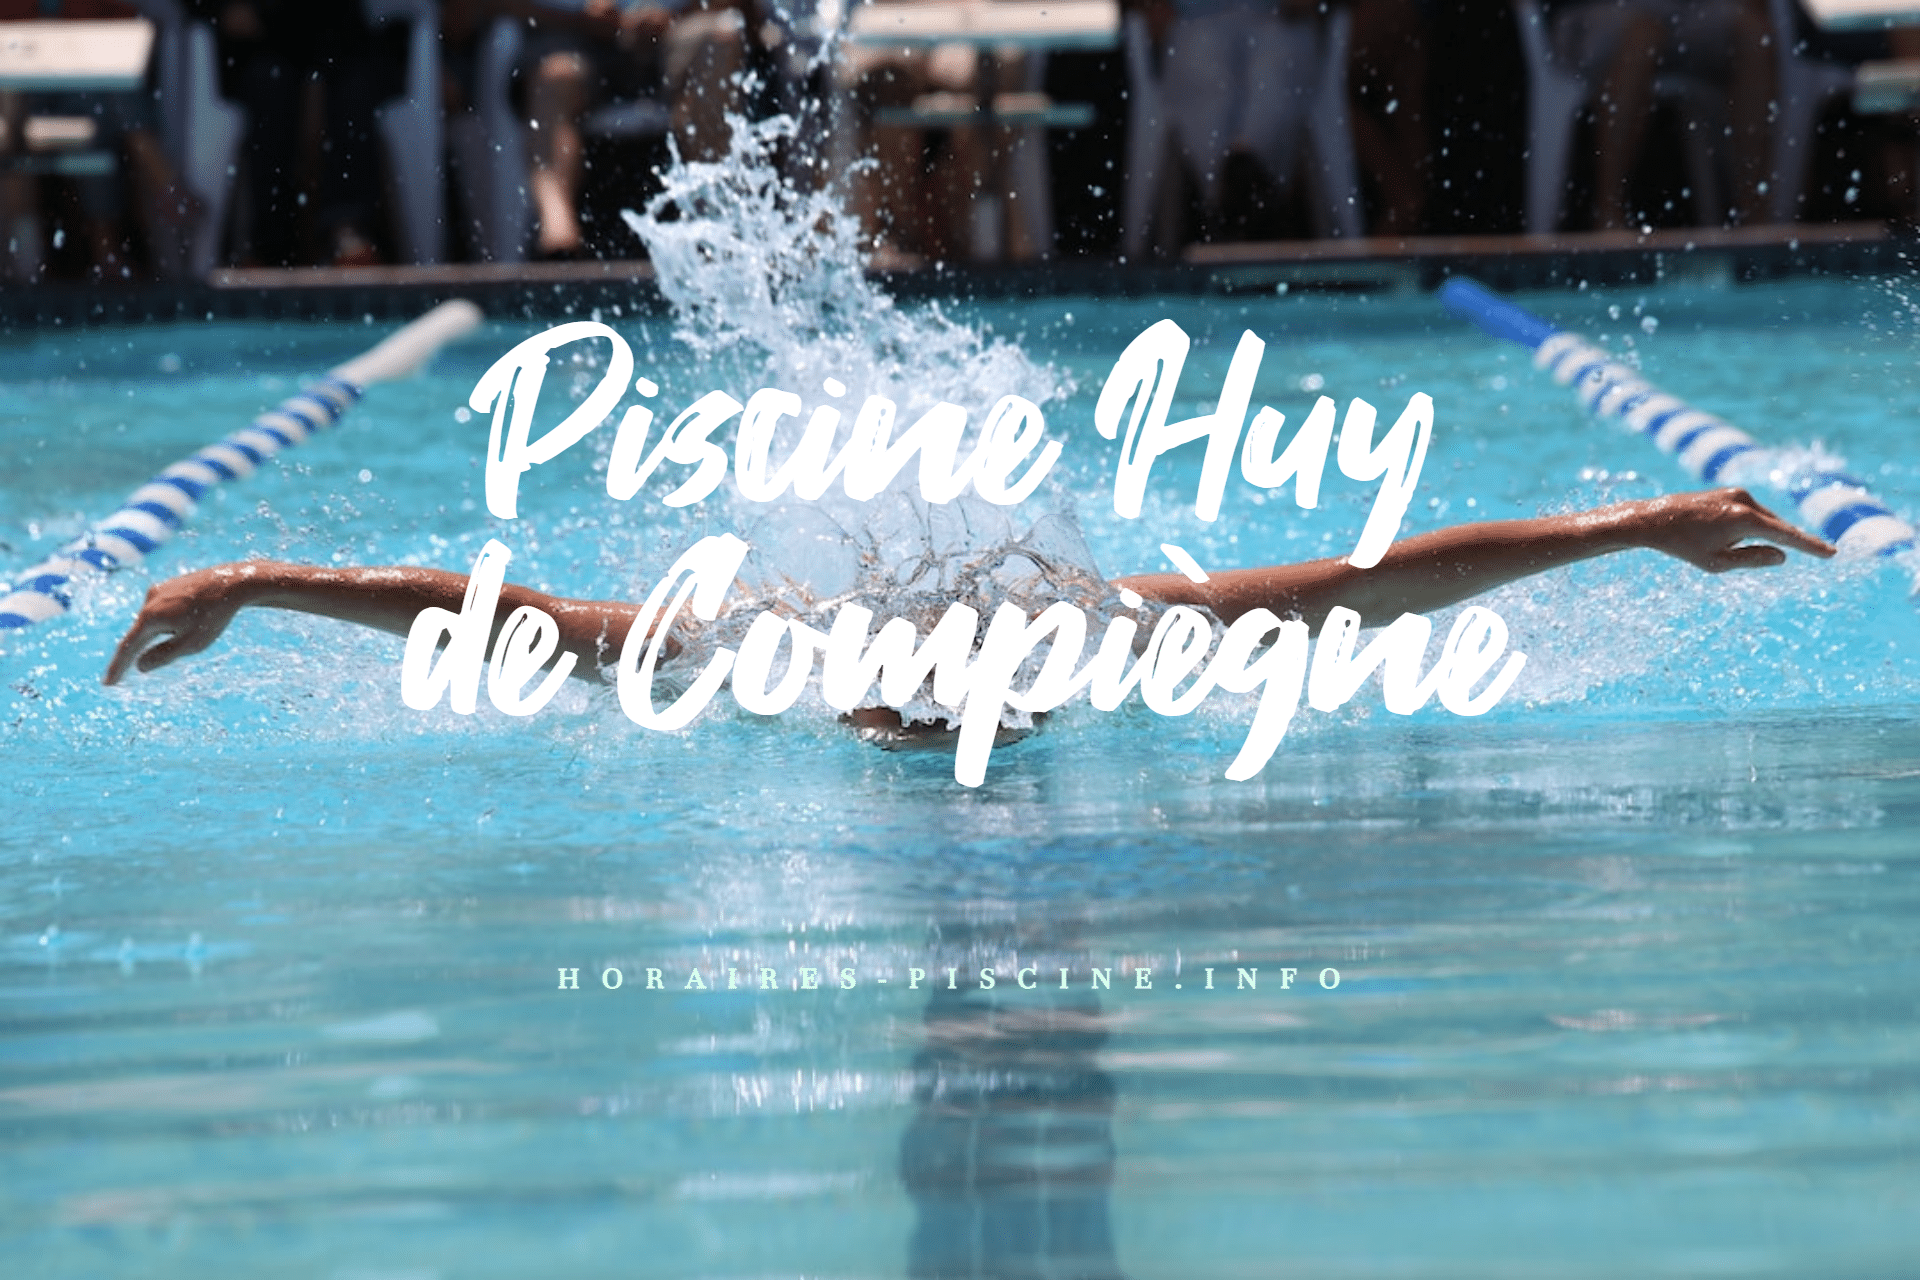 horaires Piscine Huy de Compiègne